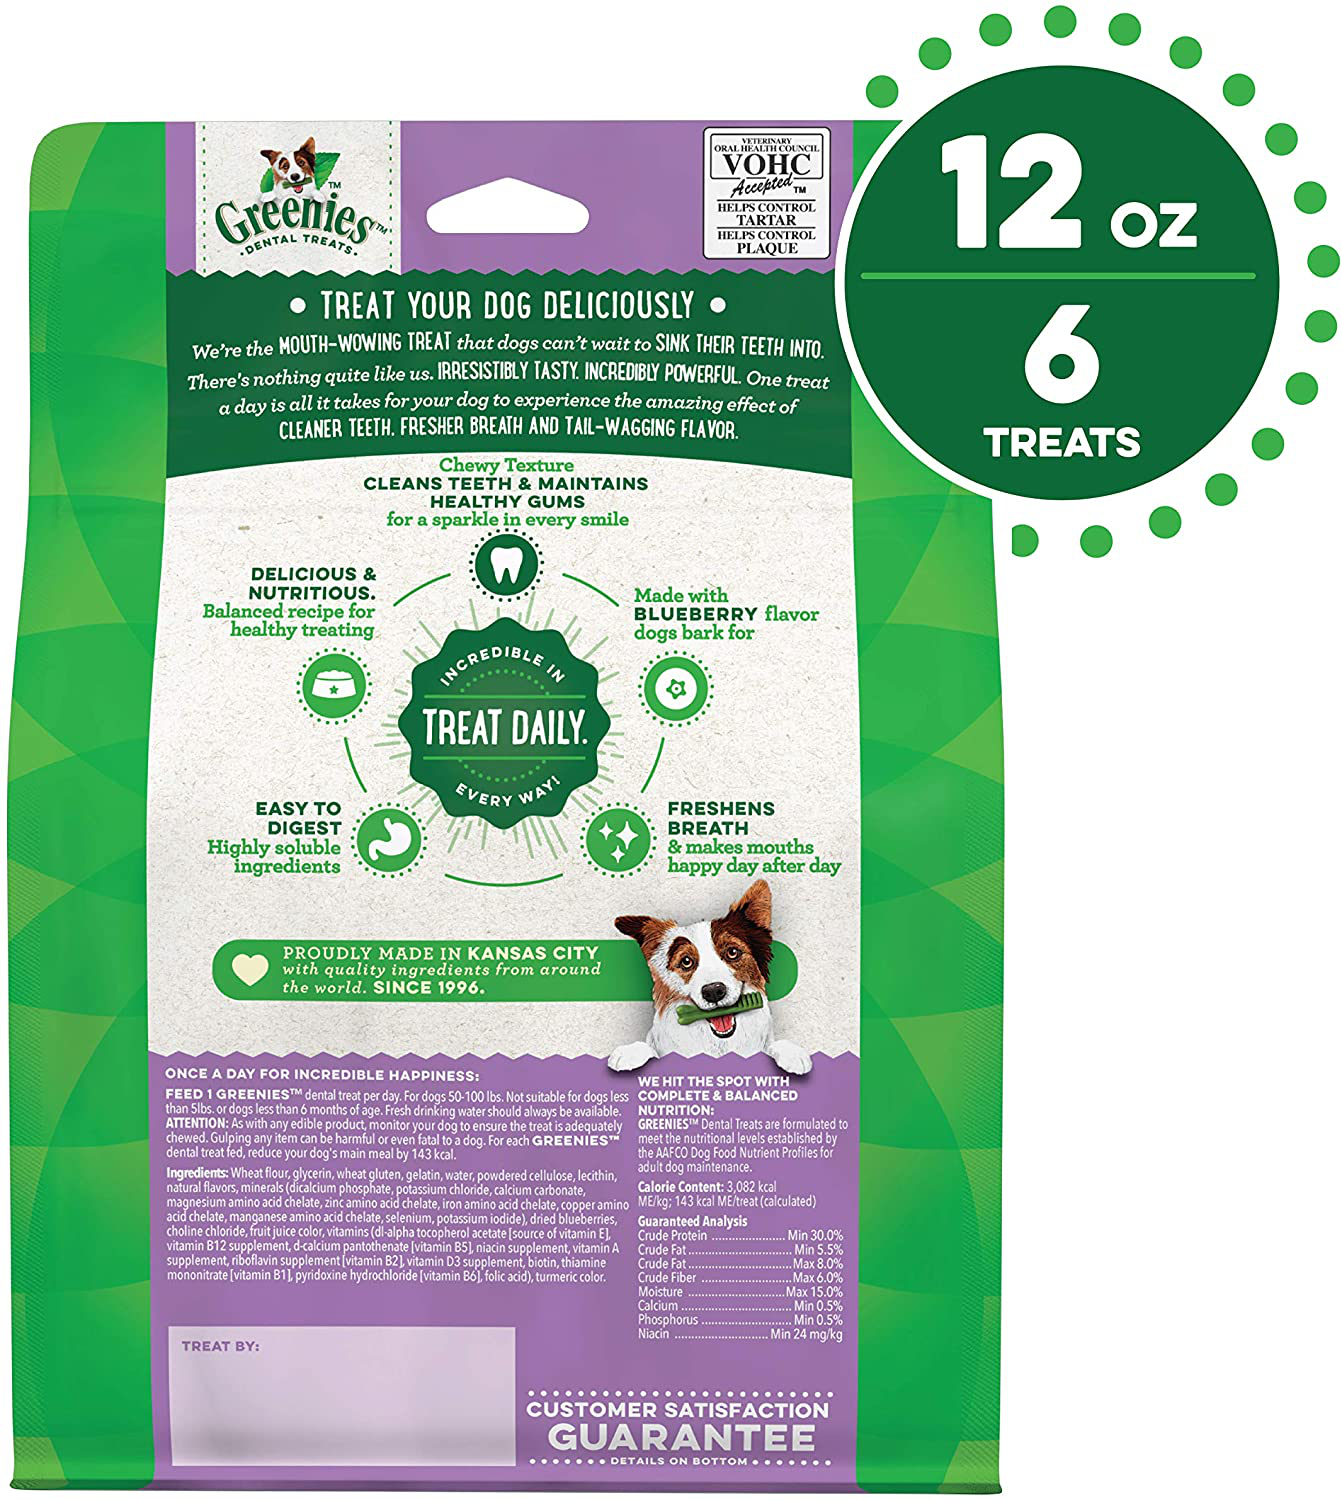 Greenies Blueberry Natural Dental Dog Treats, 12Oz Packs Animals & Pet Supplies > Pet Supplies > Dog Supplies > Dog Treats Greenies   